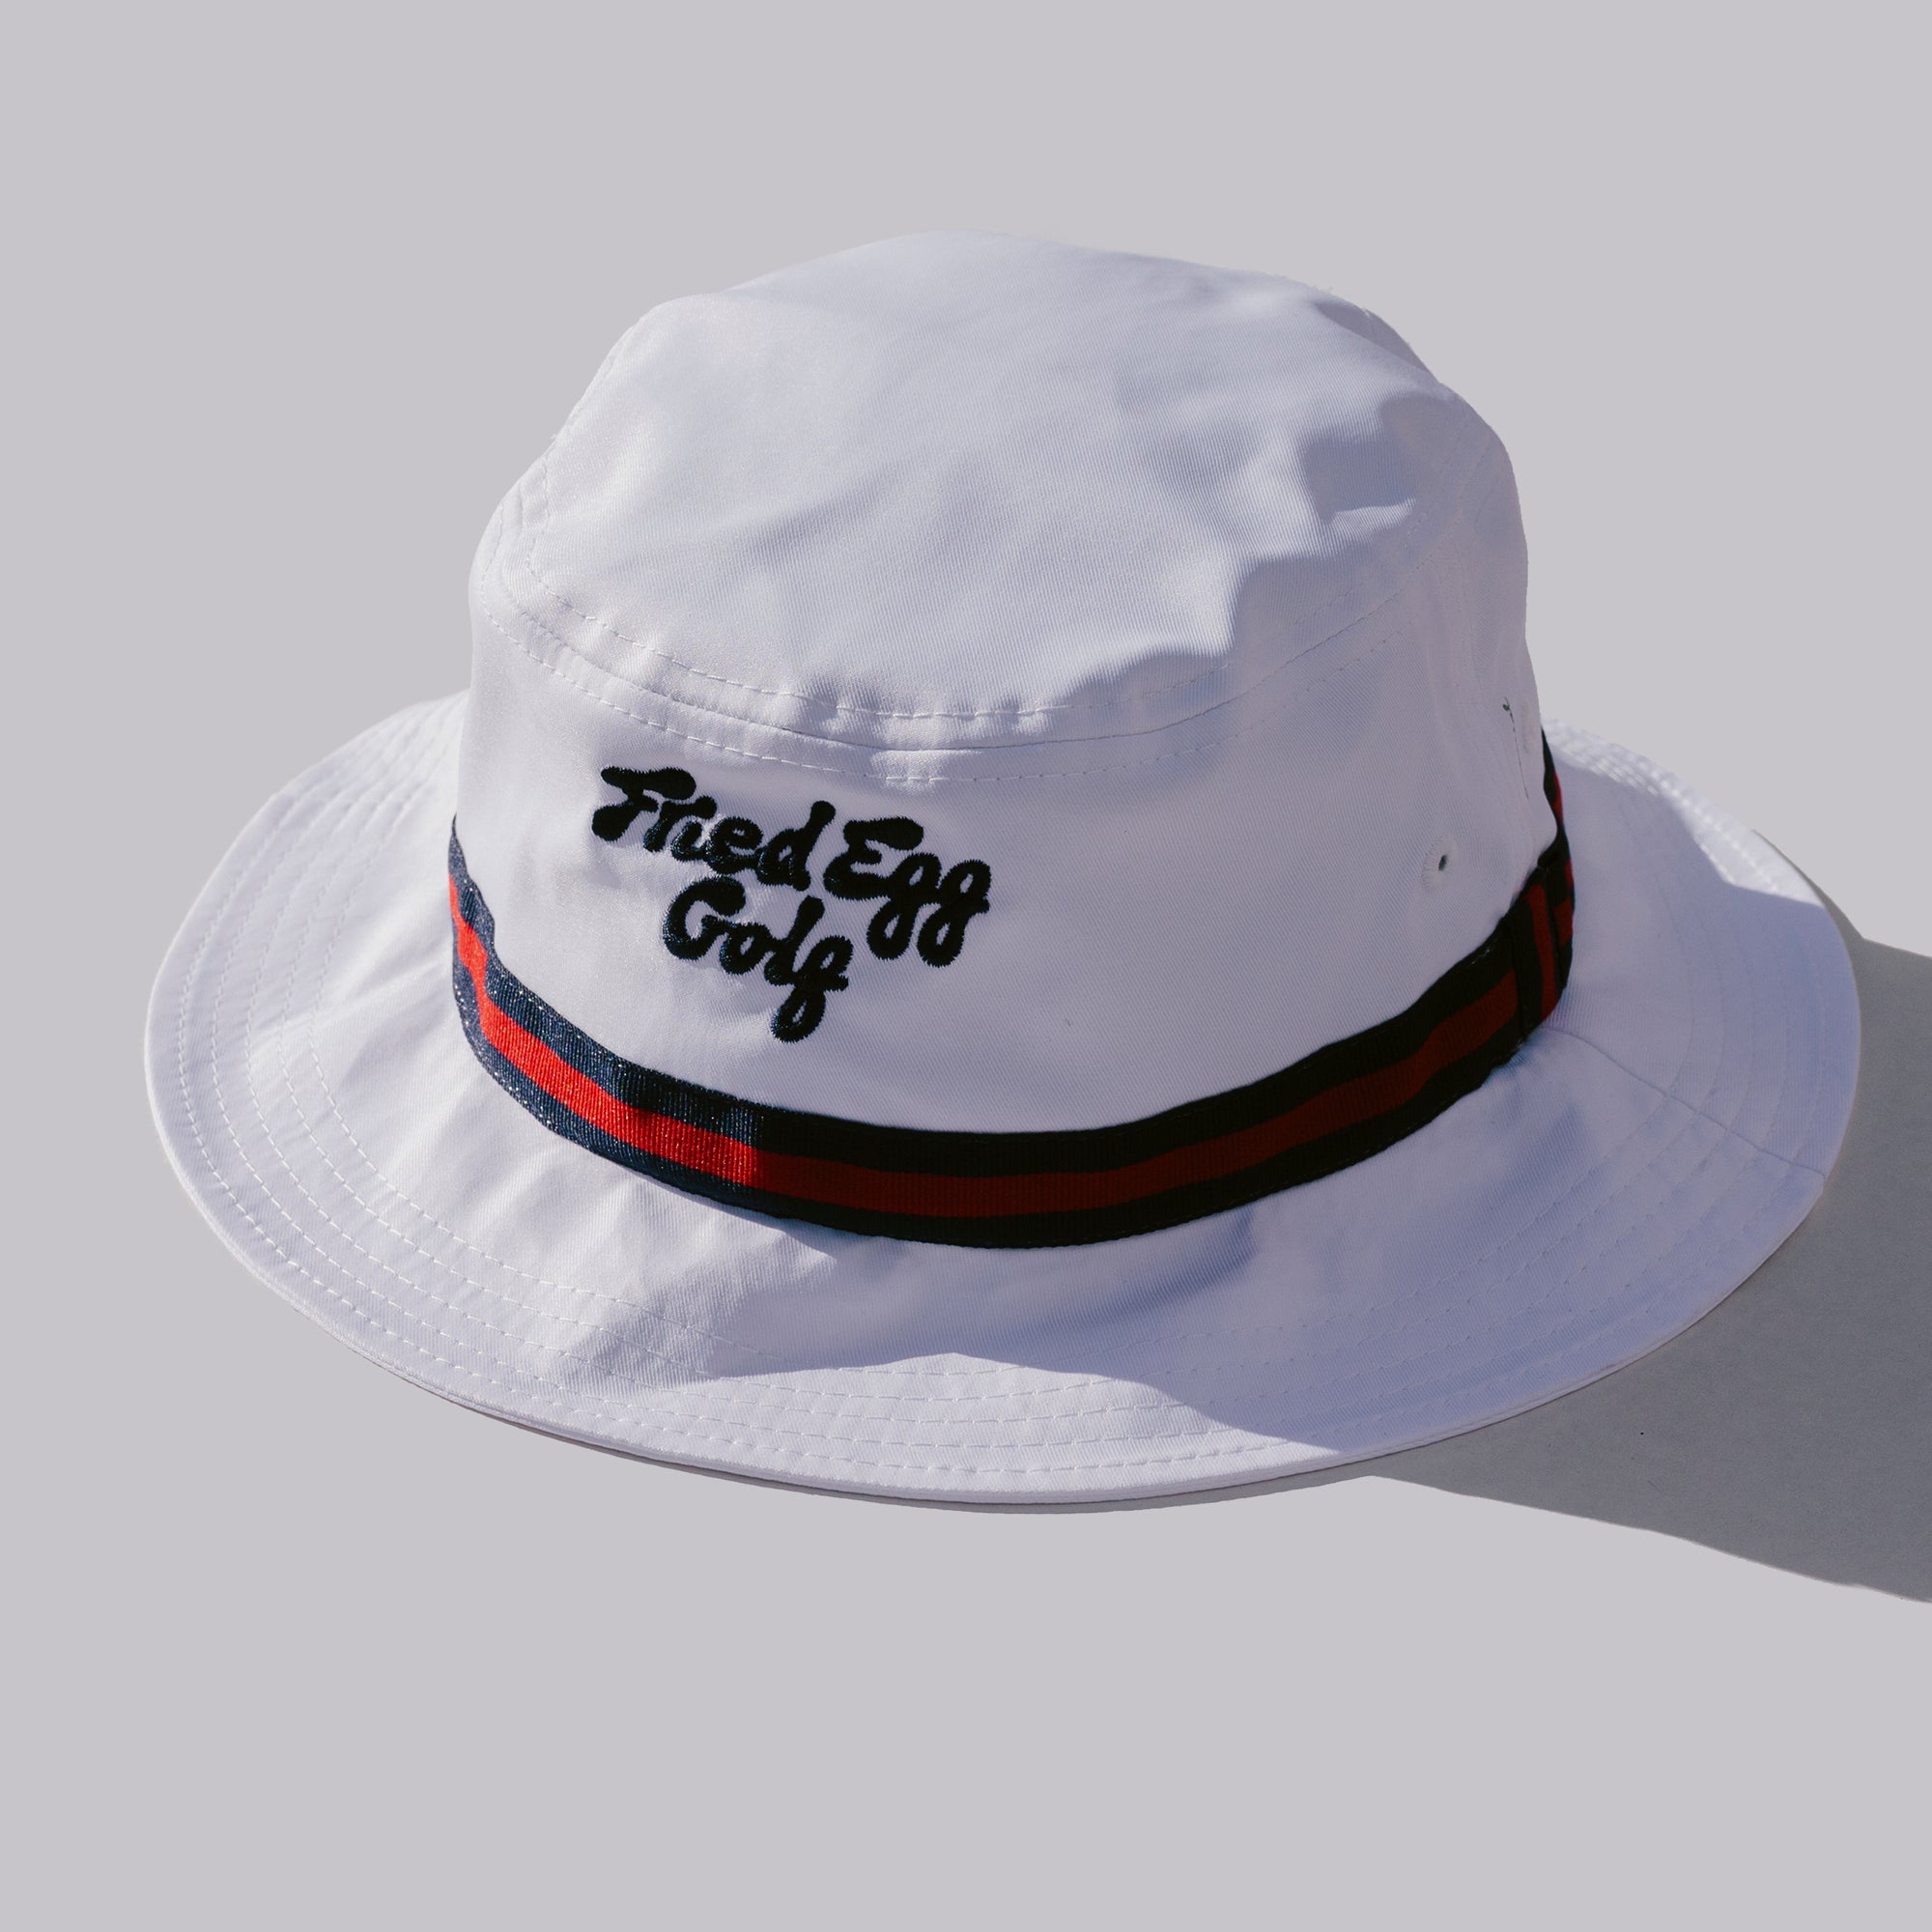 Fried Egg Golf Performance Bucket Hat - Navy/Red/Navy